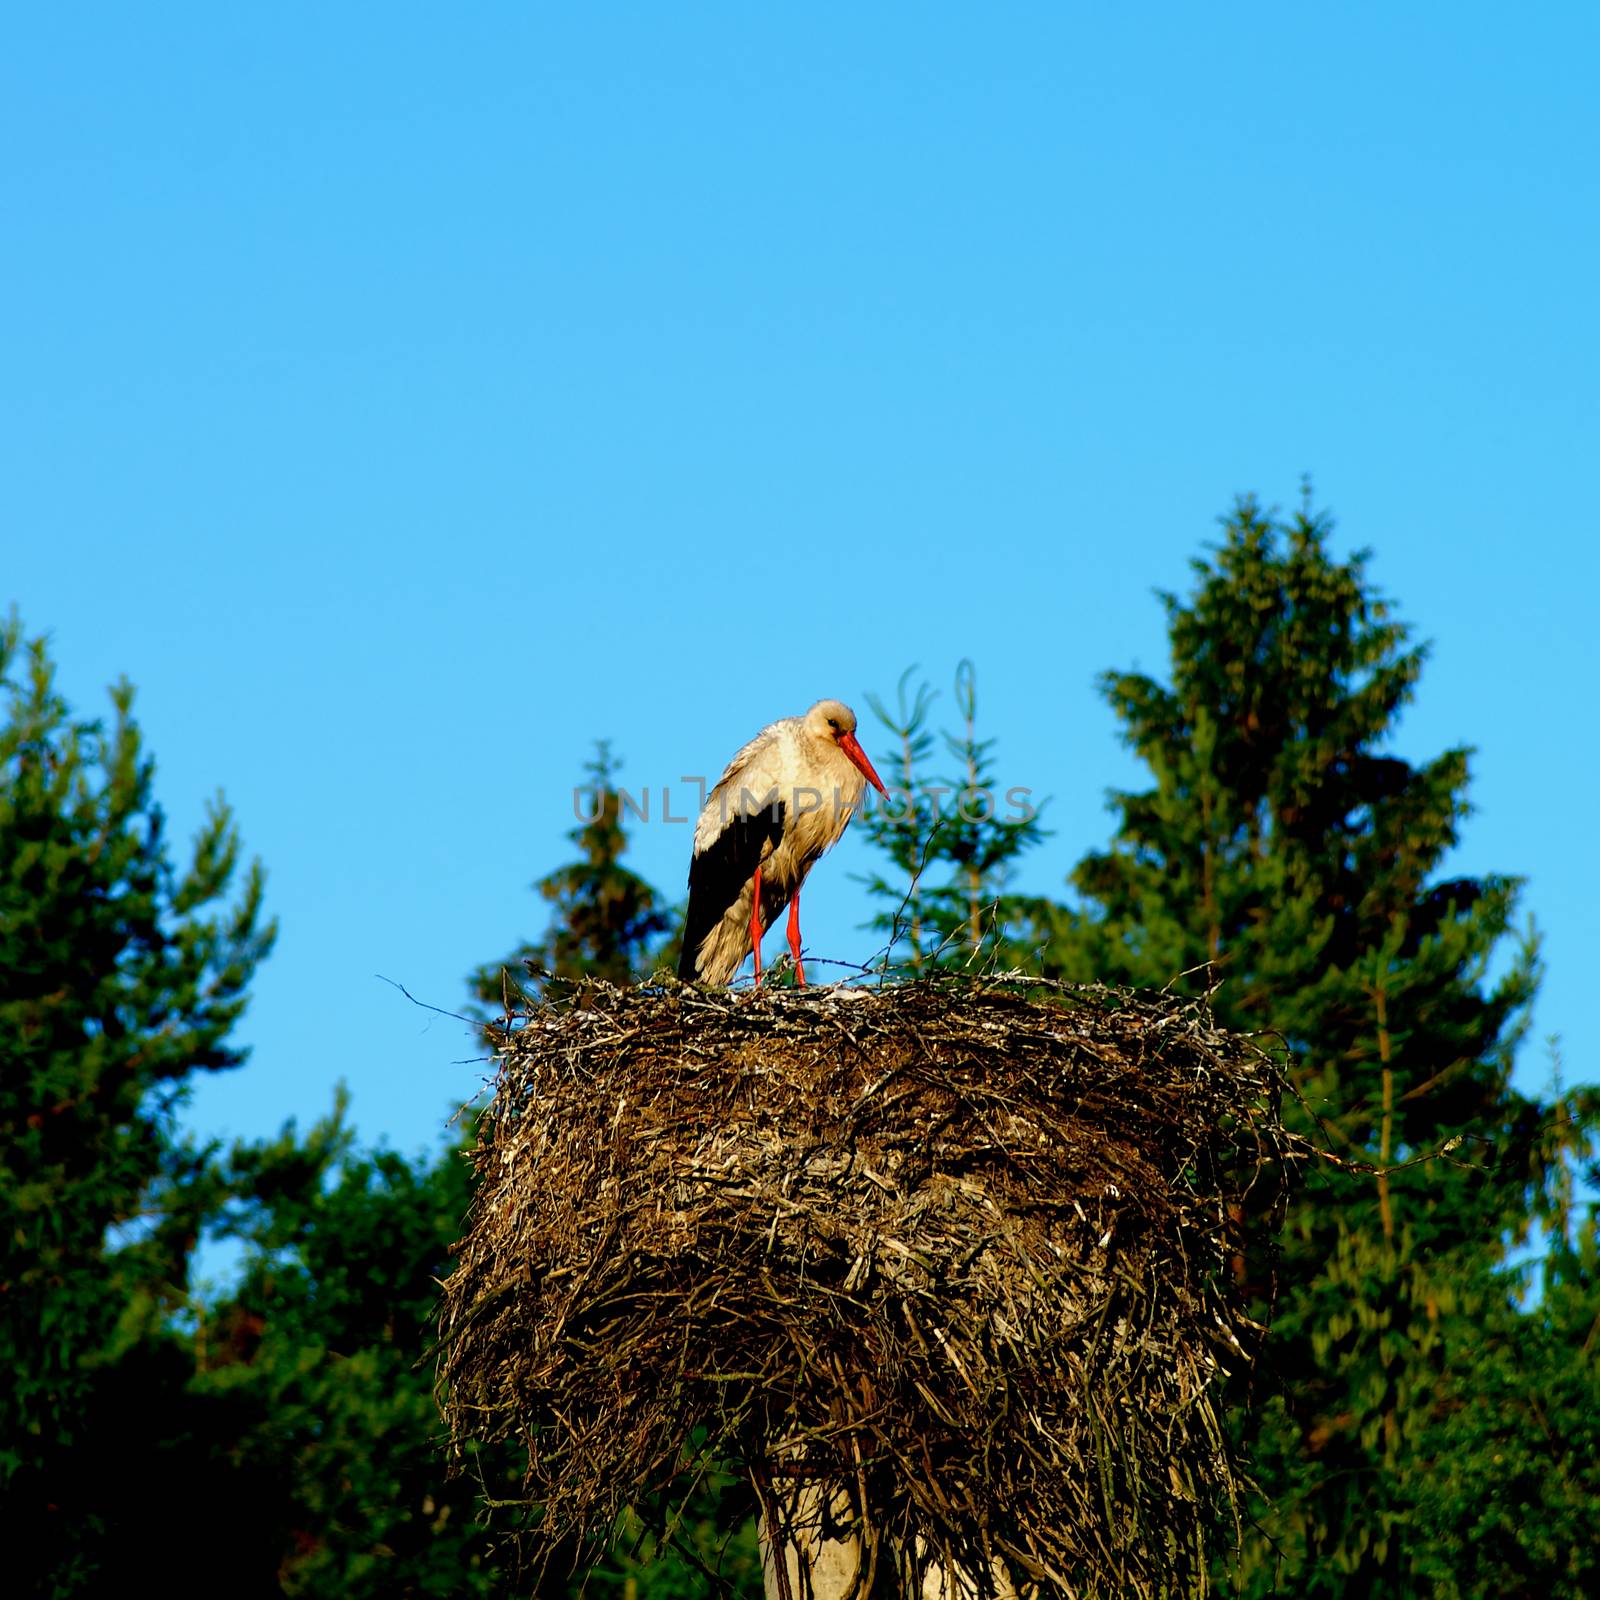 White Stork in Nest by zhekos